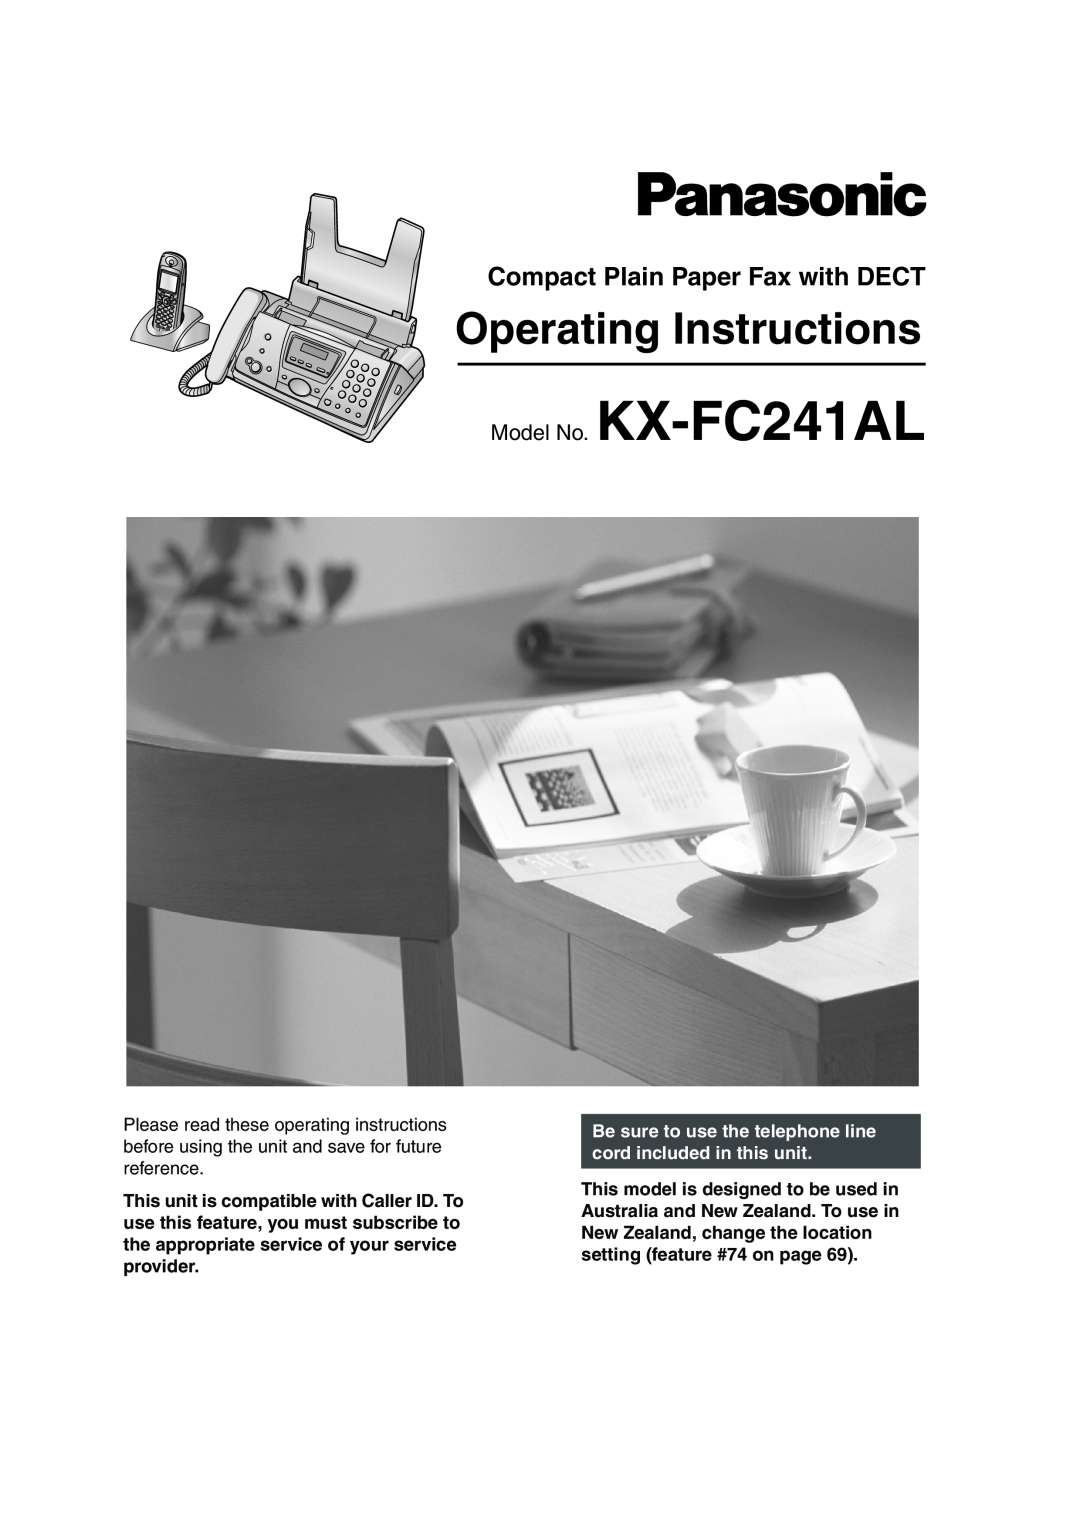 Panasonic manual Compact Plain Paper Fax with DECT, Operating Instructions, Model No. KX-FC241AL 